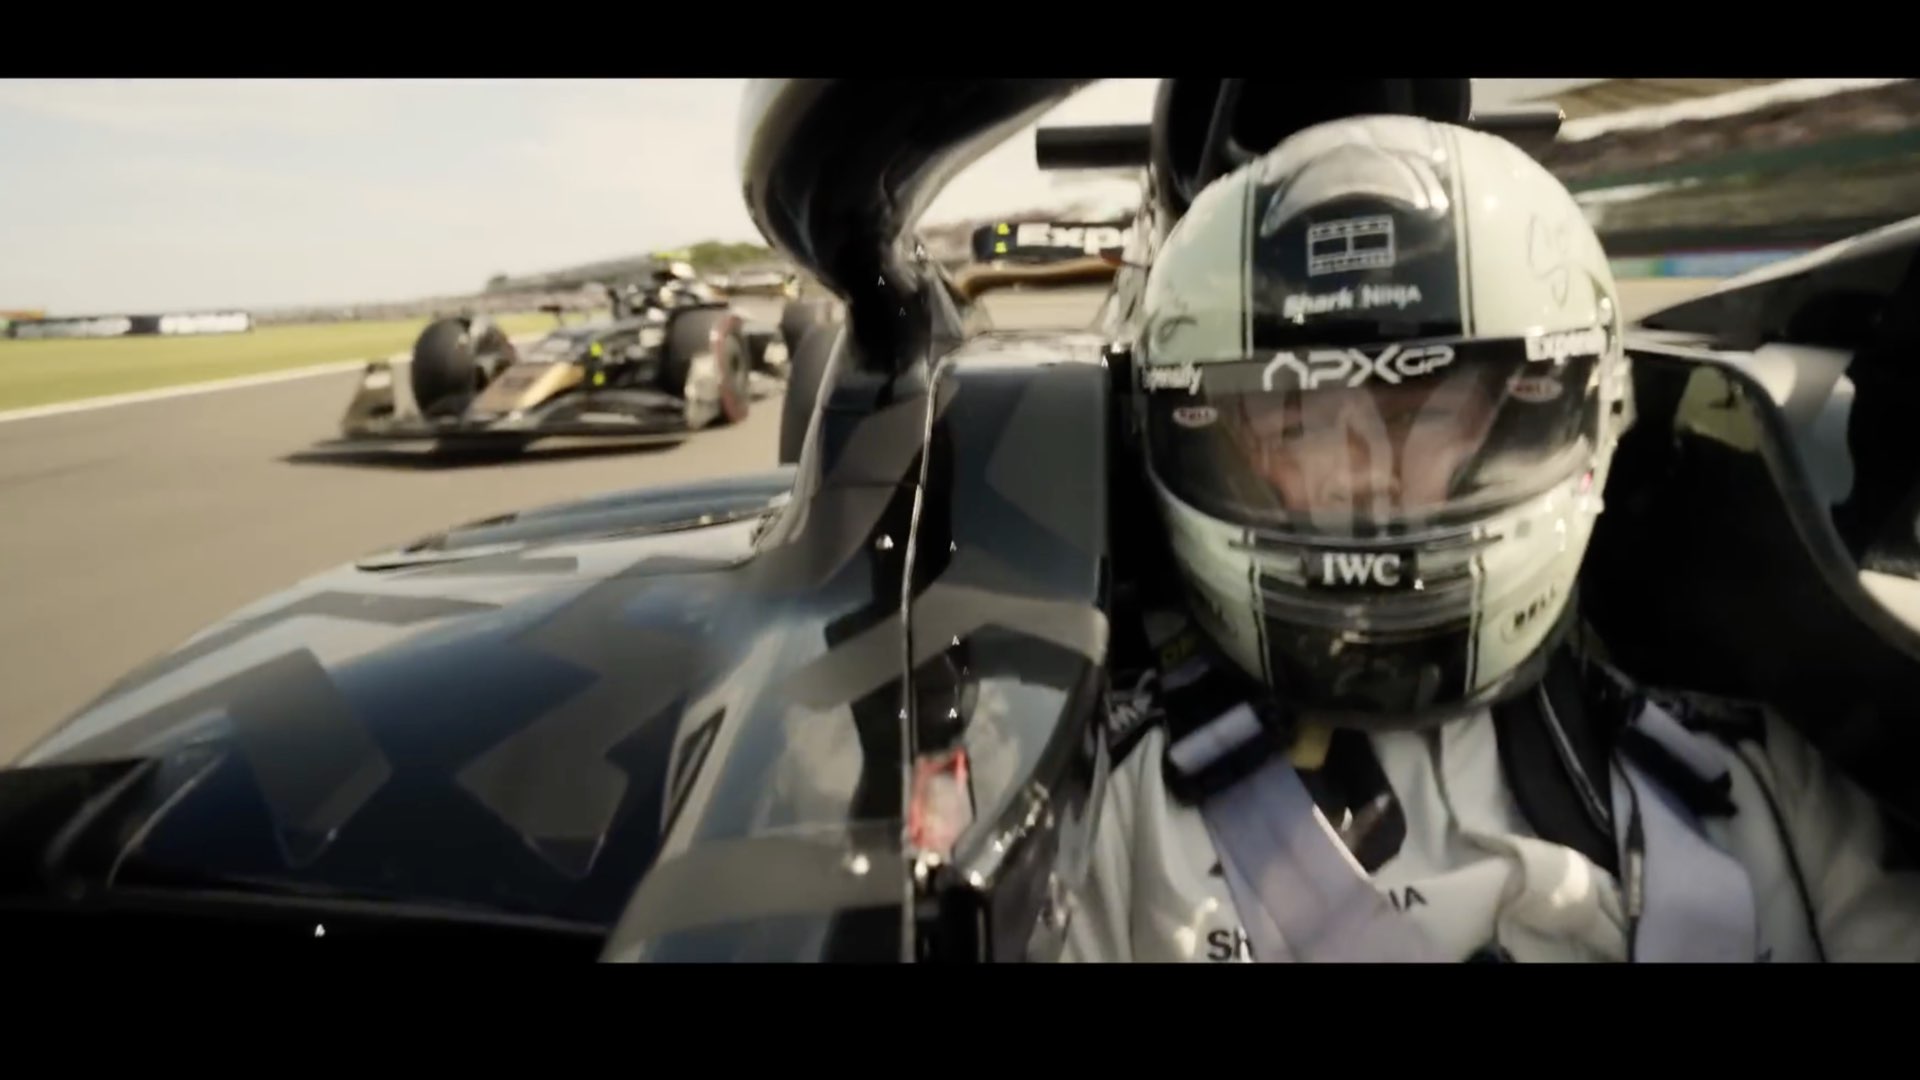 F1 film. A screenshot from the teaser